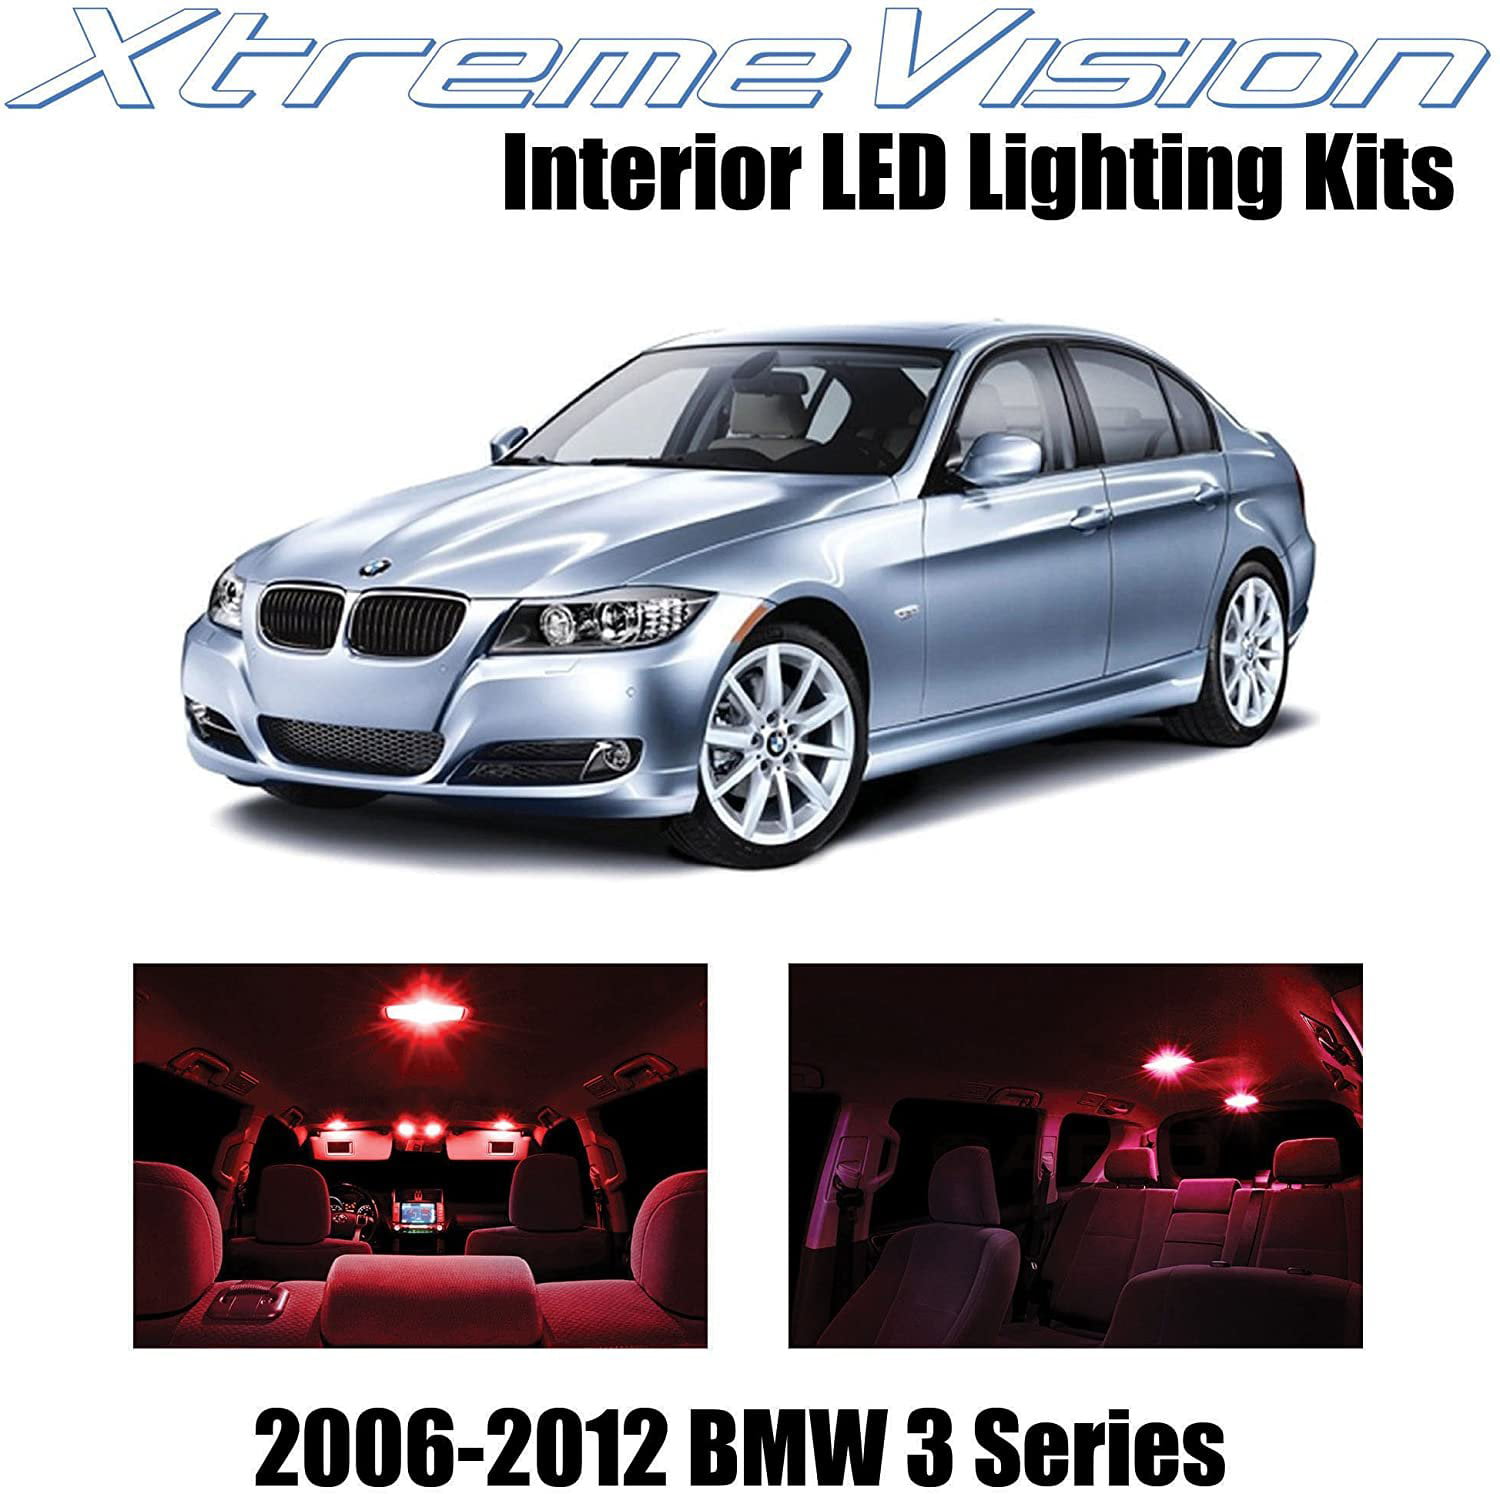 BMW 2015 - 2018 S1000RR . LED Headlight Set .. Big improvement over stock!